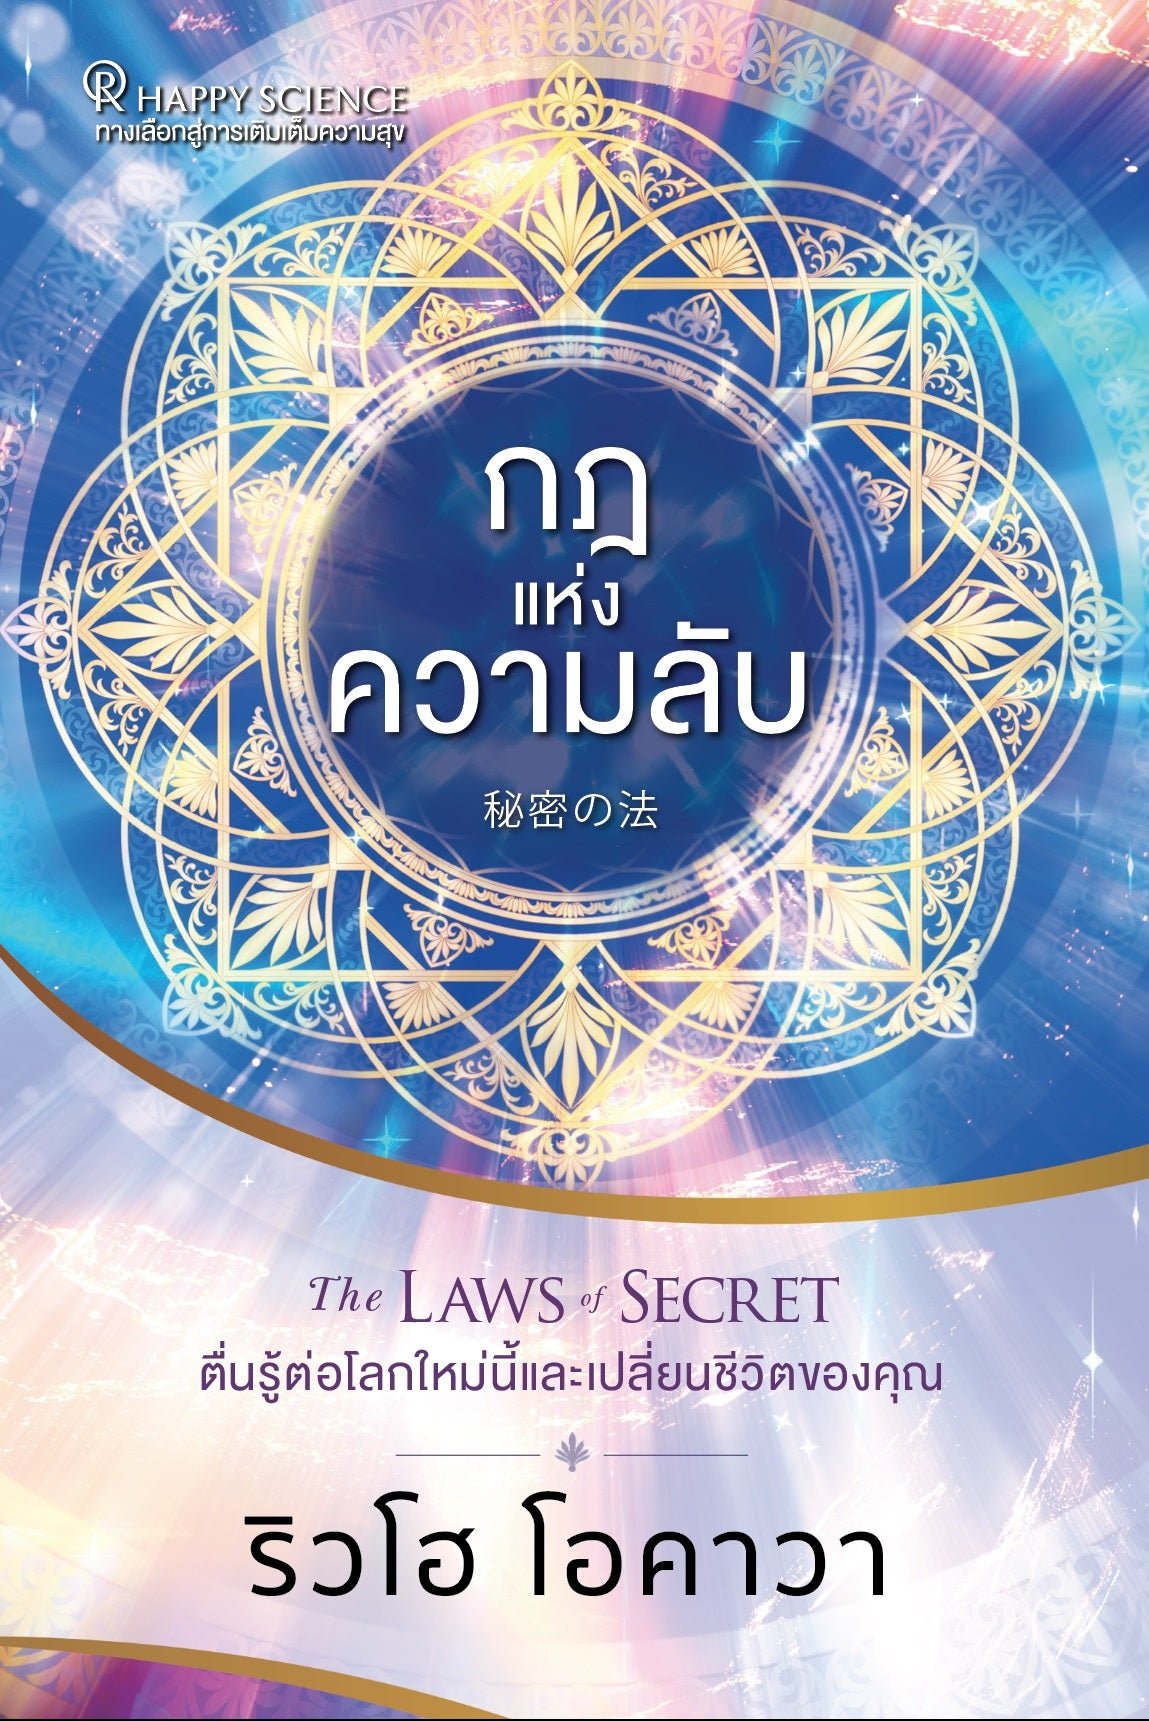 Book, The Laws of Secret : Awaken to This New World and Change Your Life, Ryuho Okawa, Thai - IRH Press International